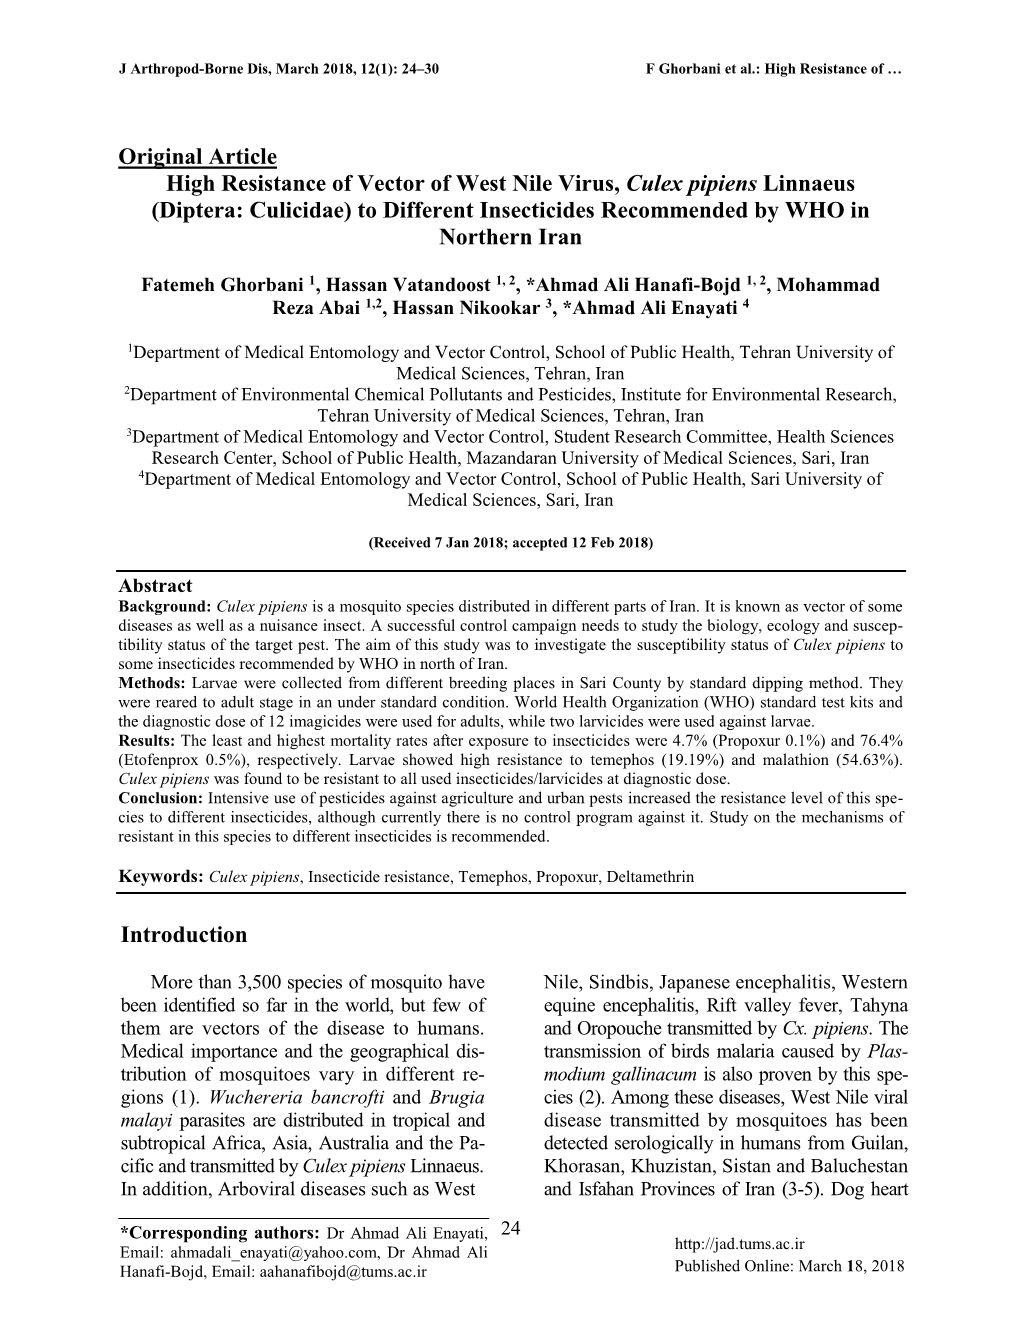 Original Article High Resistance of Vector of West Nile Virus, Culex